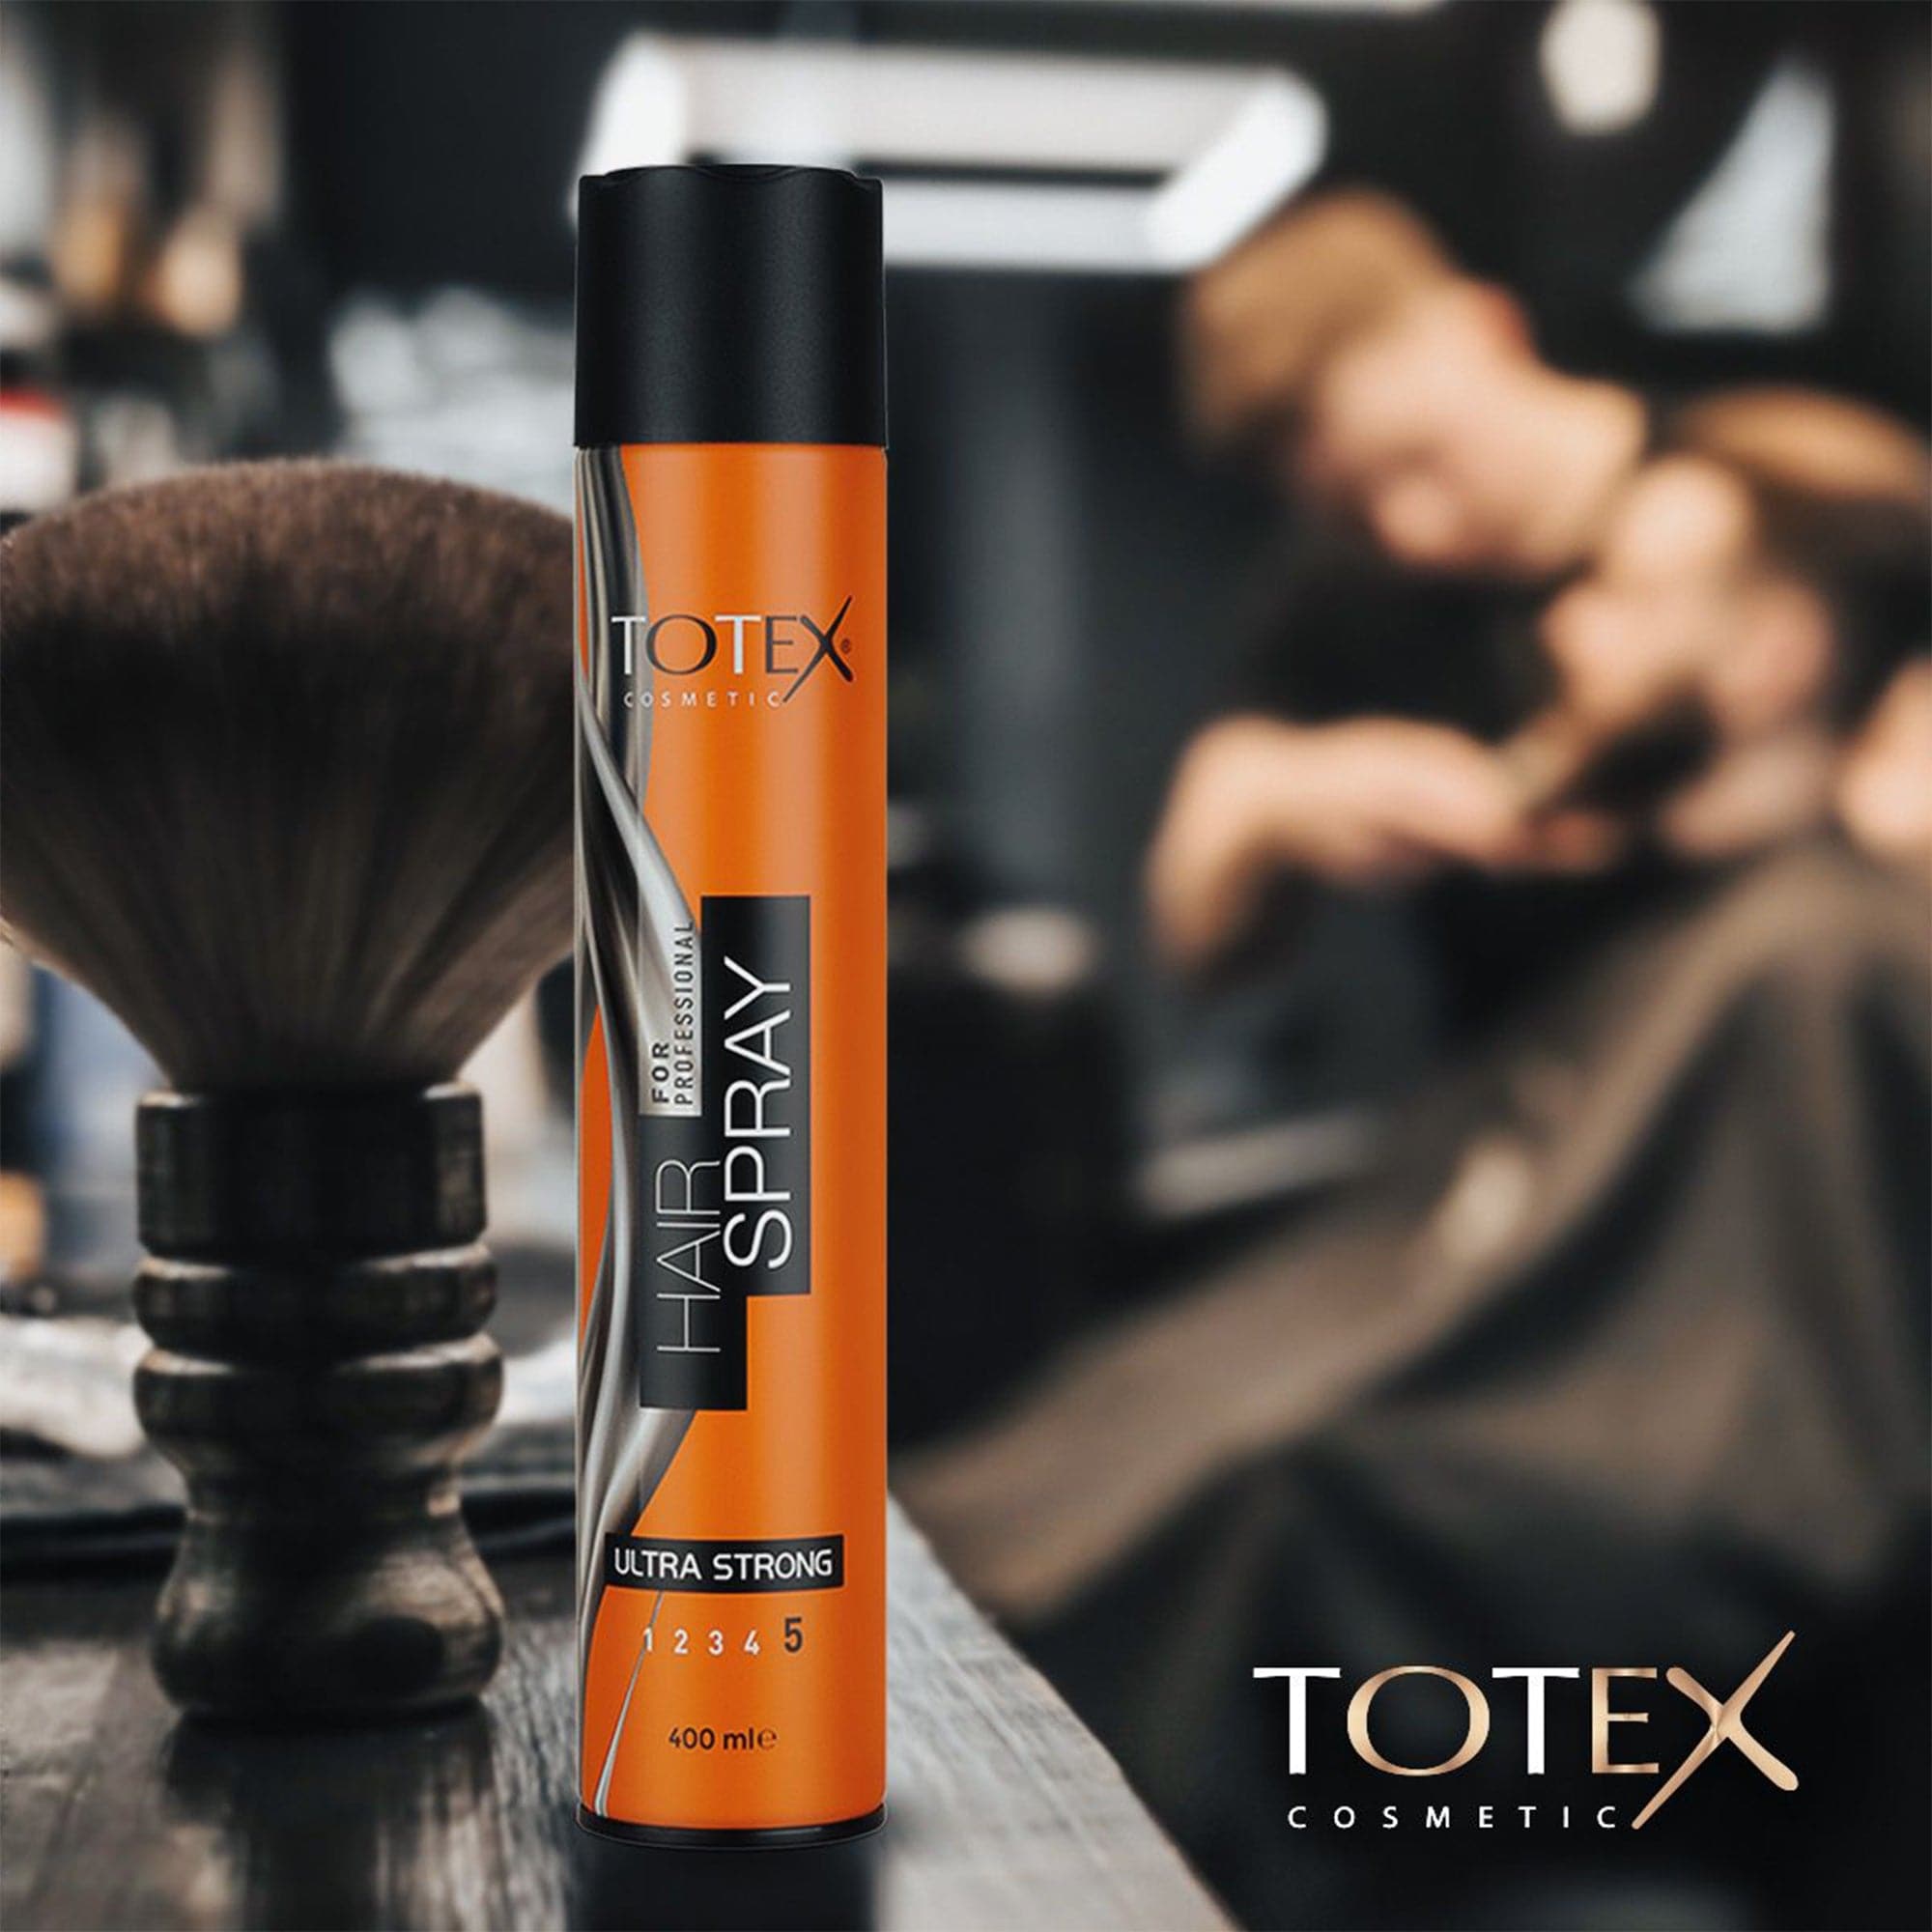 Totex - Hair Spray Ultra Strong 400ml